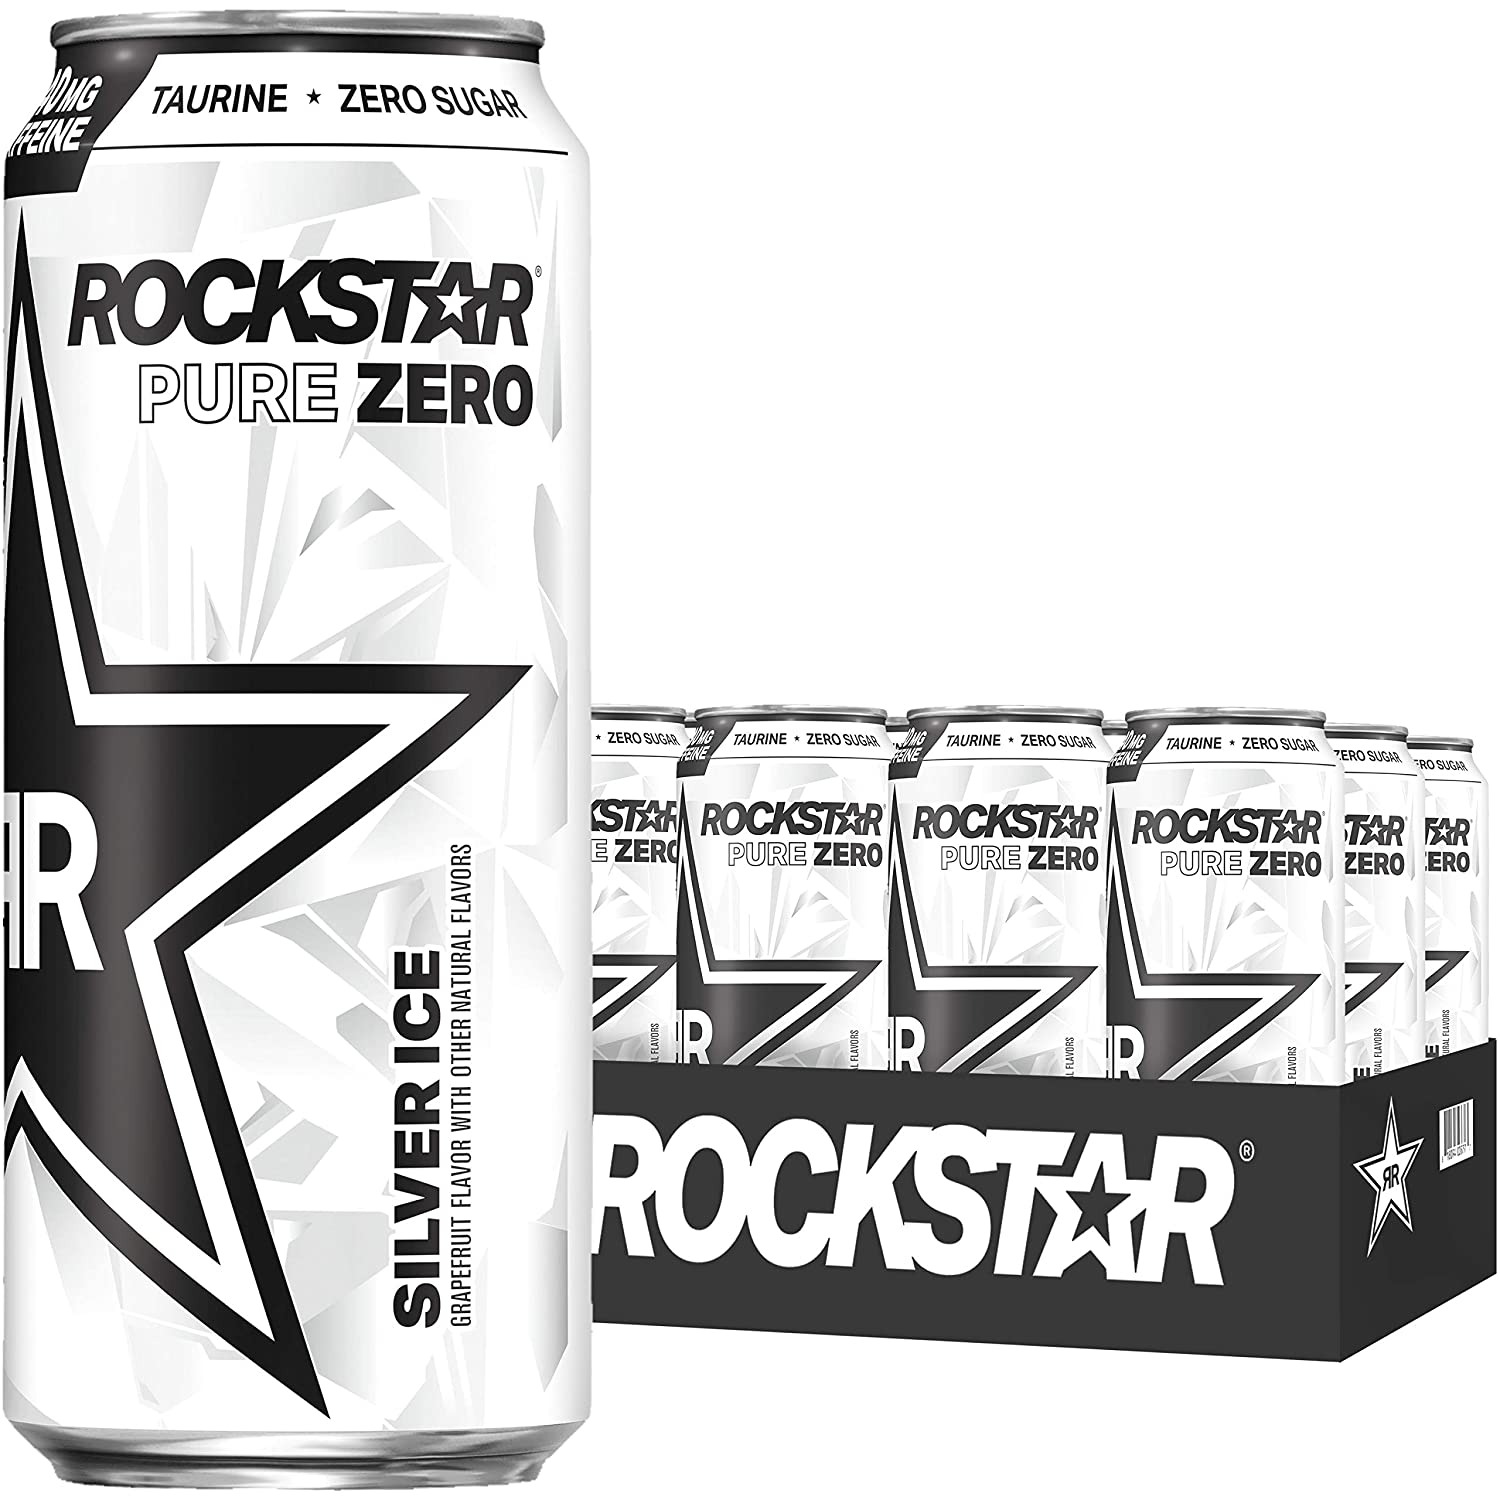 Rockstar 12 Pack (Fruit Punch, Silver Ice, and Kiwi Strawberry) @Amazon - $12.42+